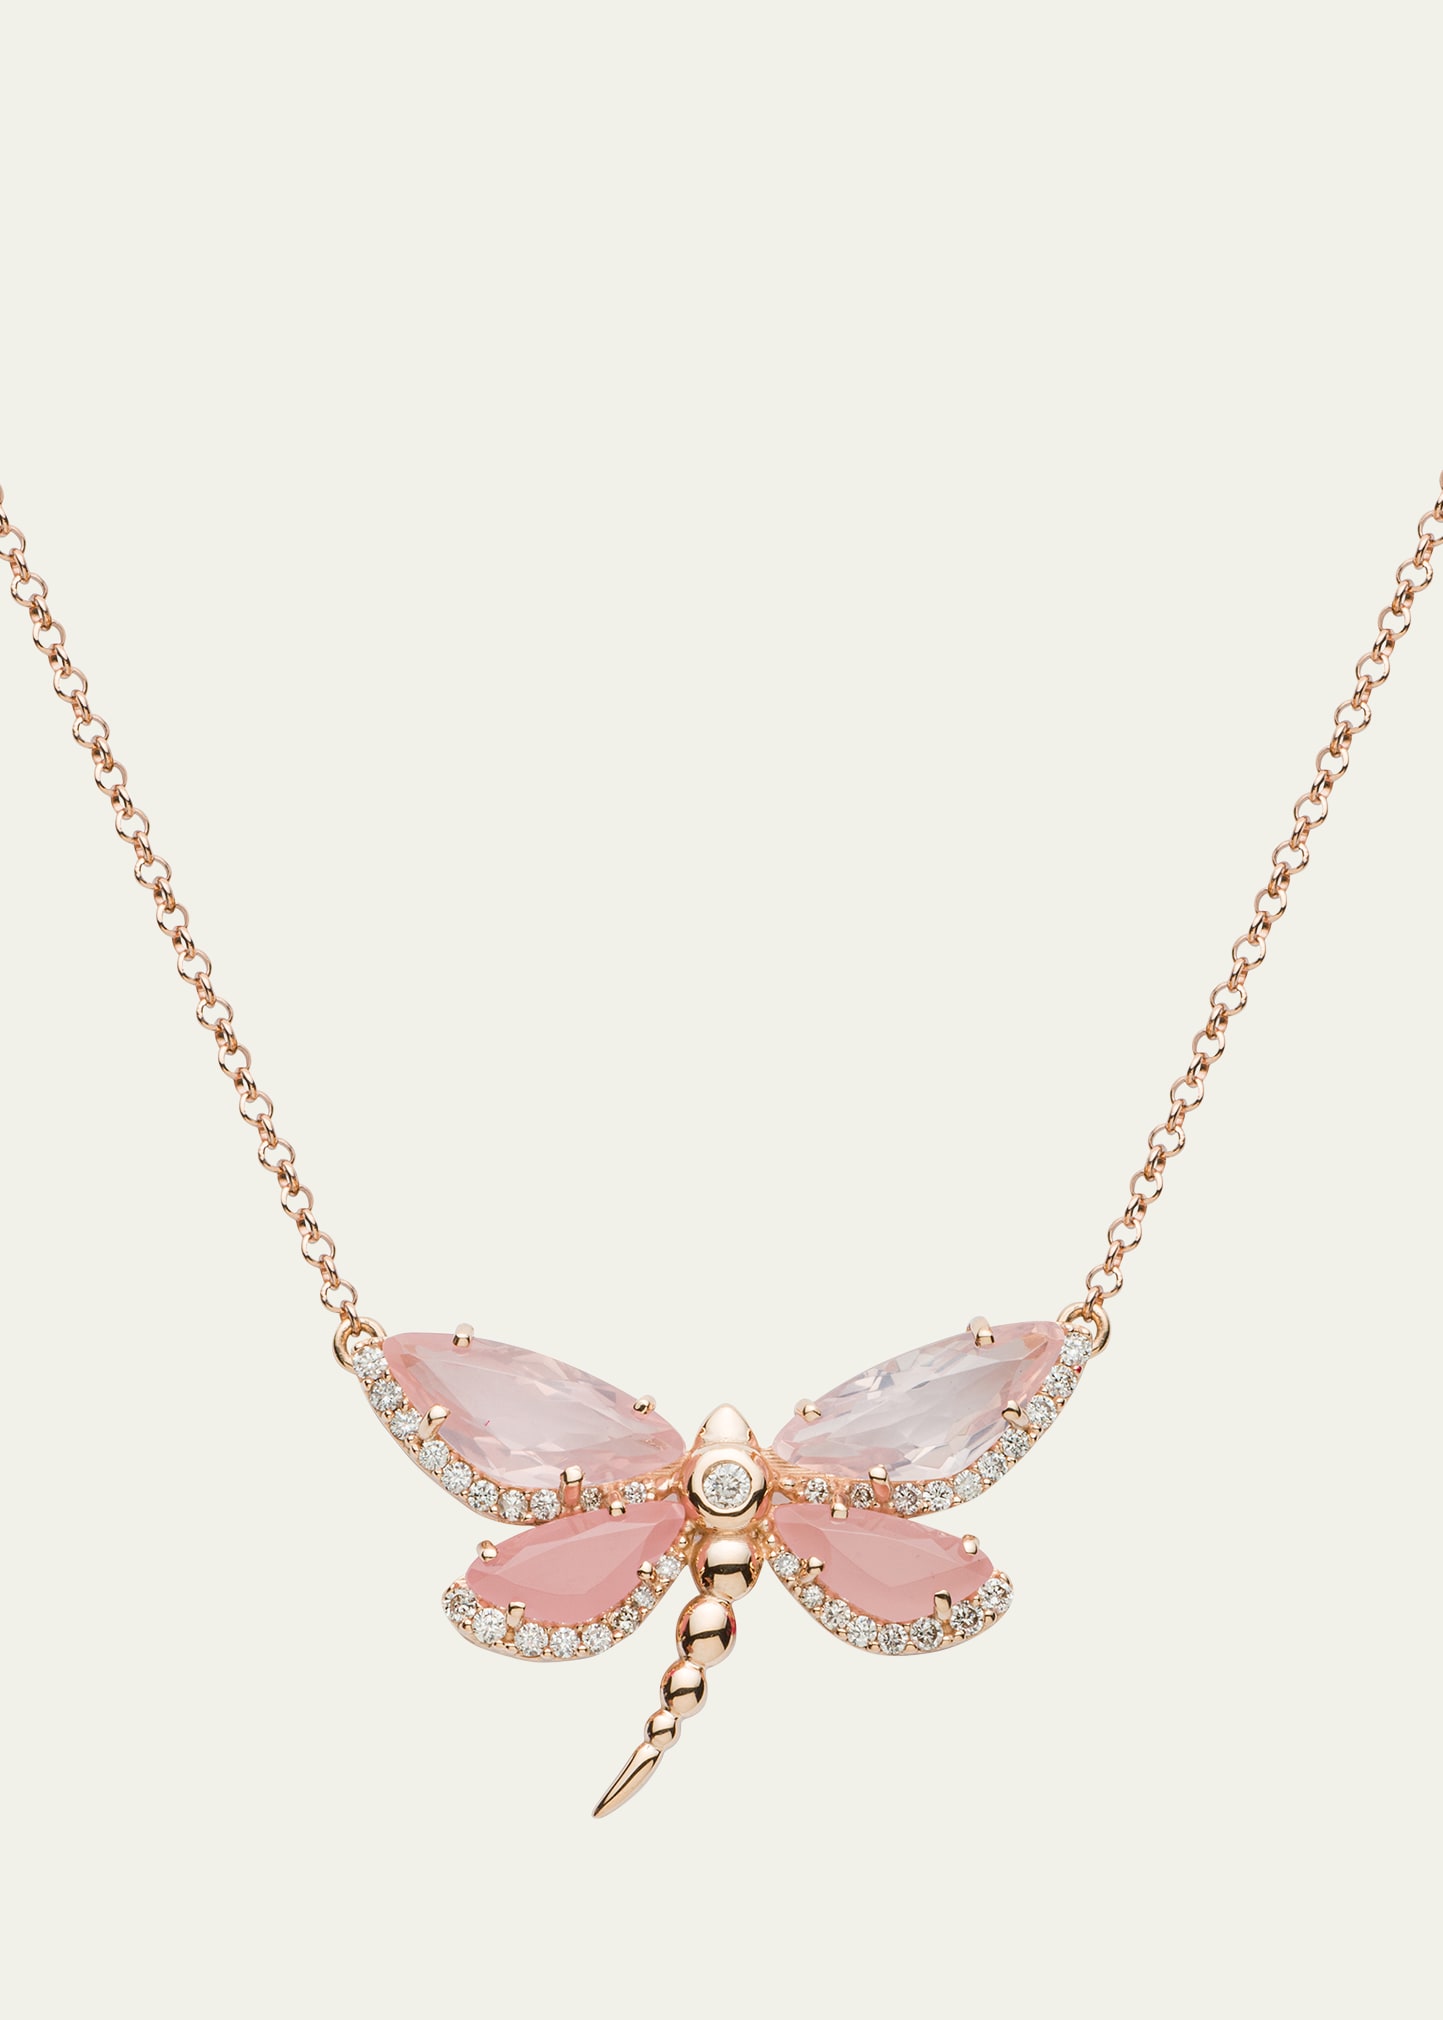 Daniella Kronfle Medium Quartz Dragonfly Necklace With Diamonds In Pink